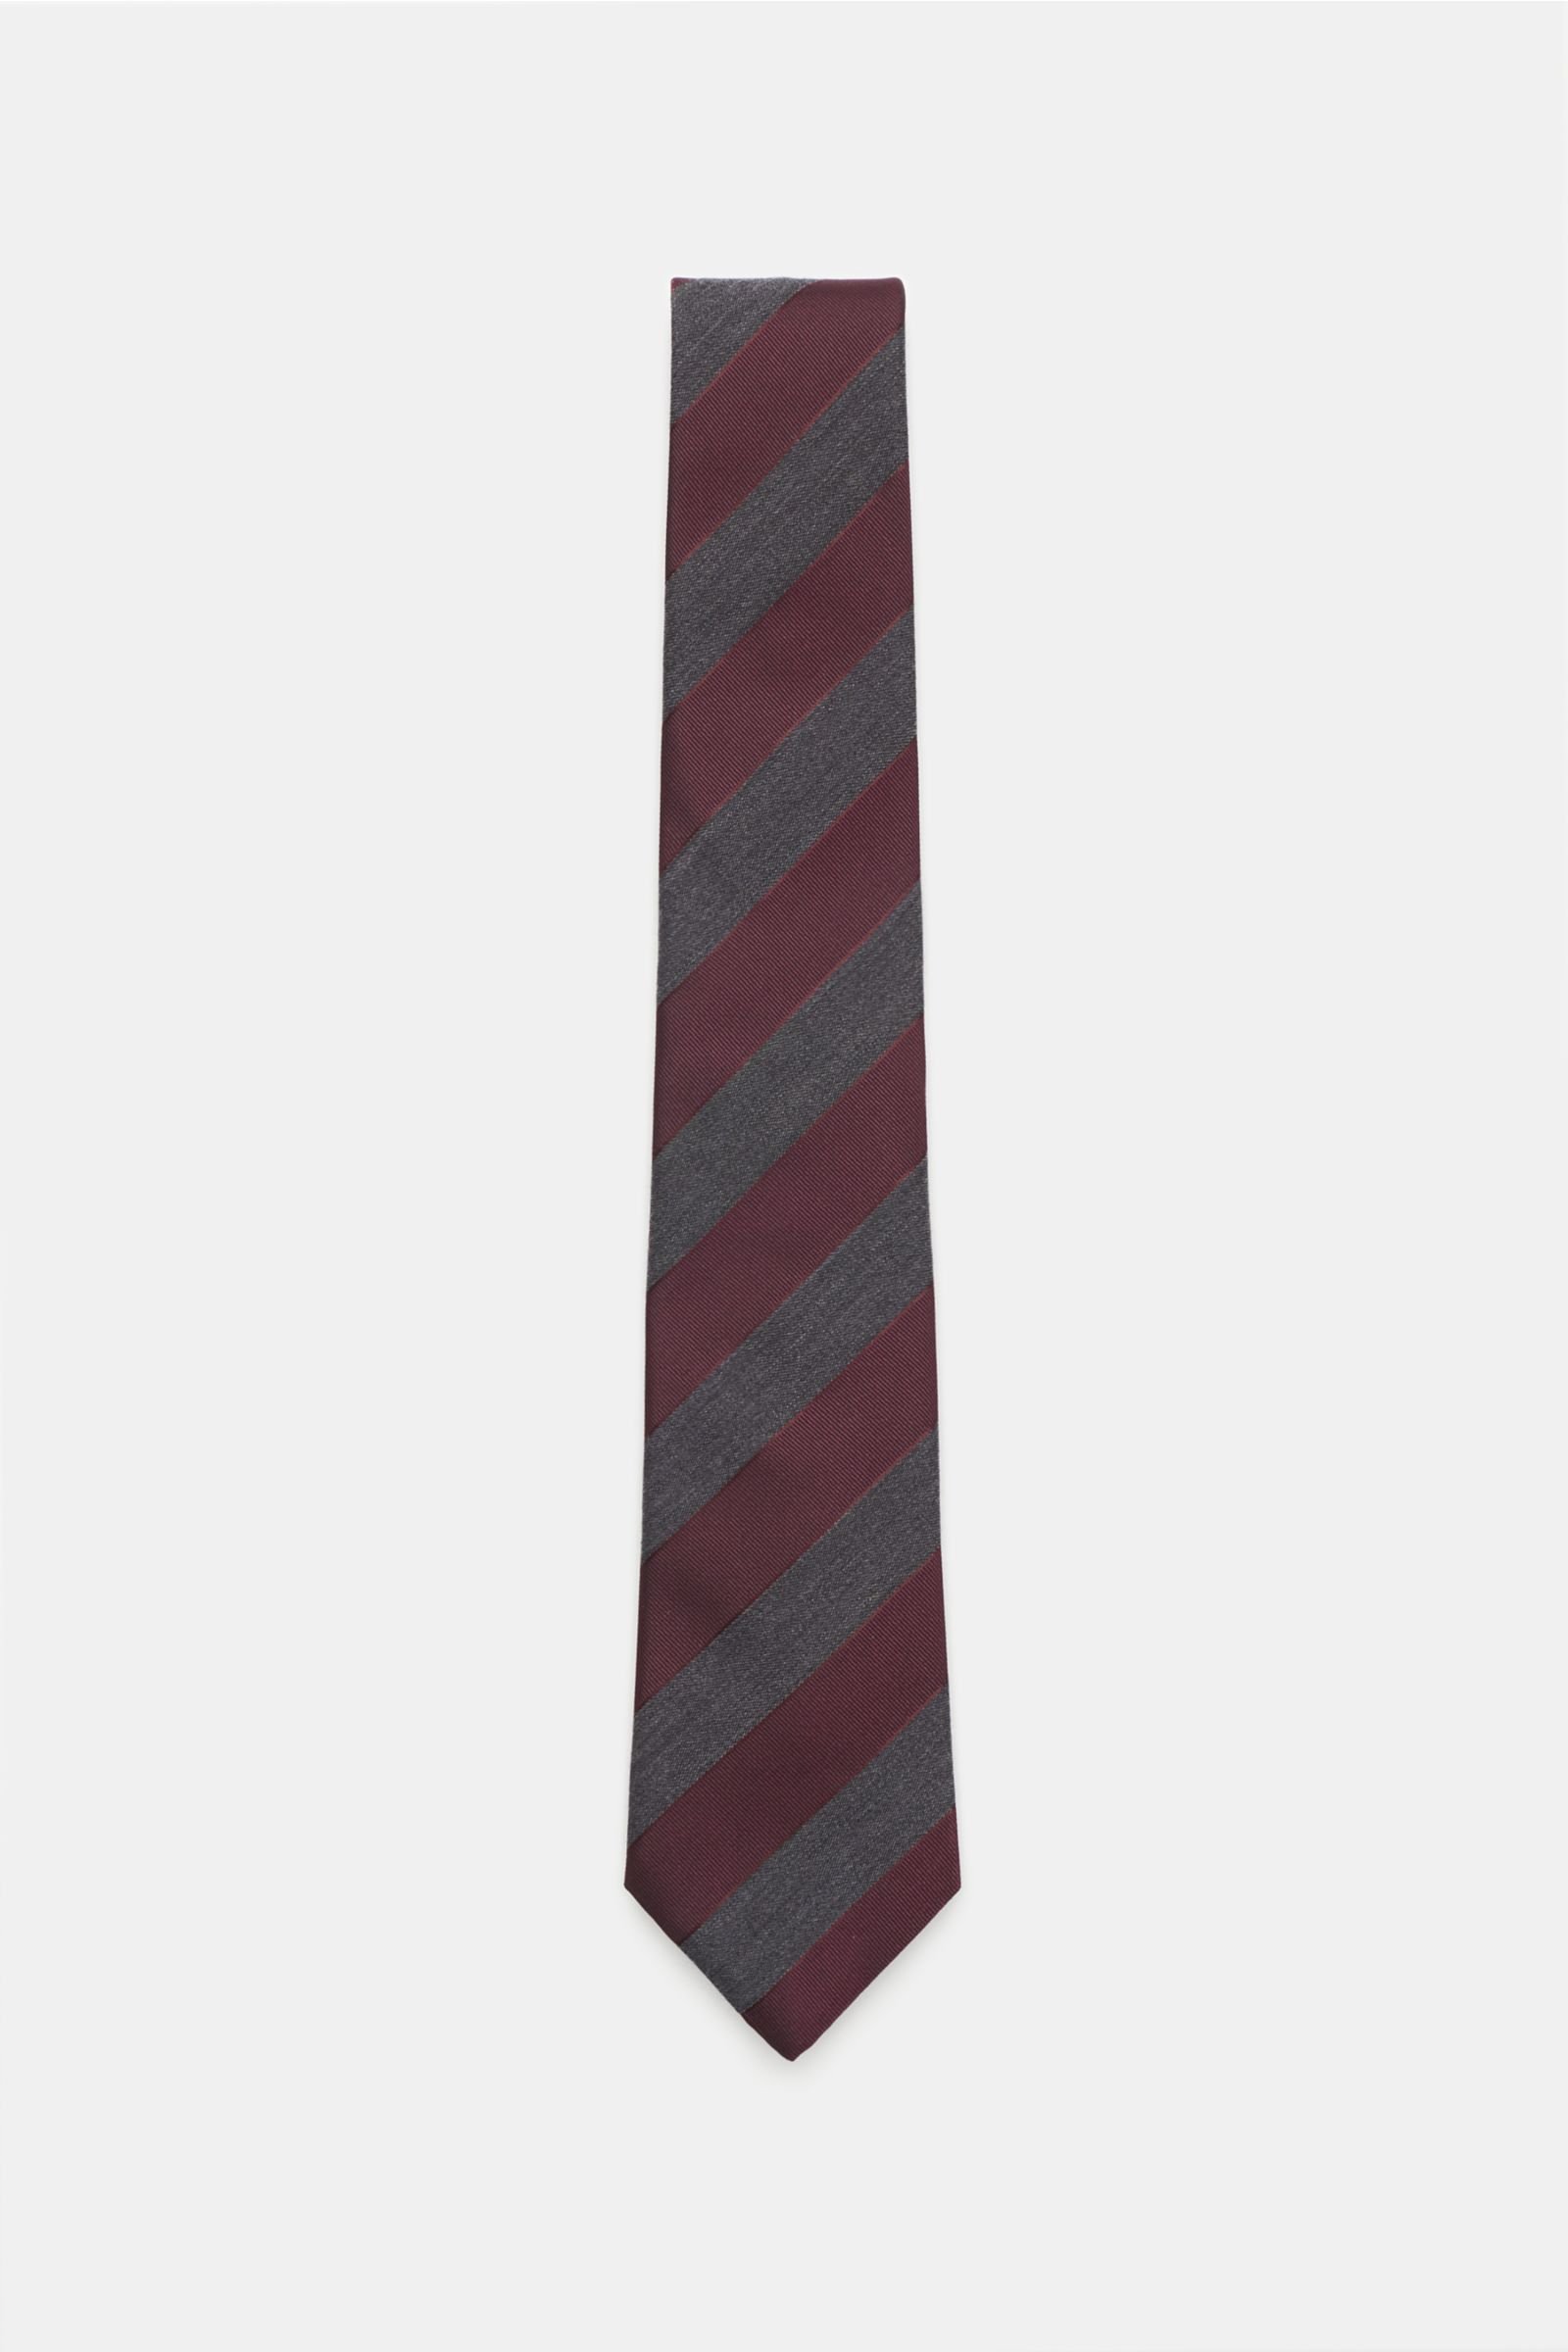 Tie burgundy/dark grey striped